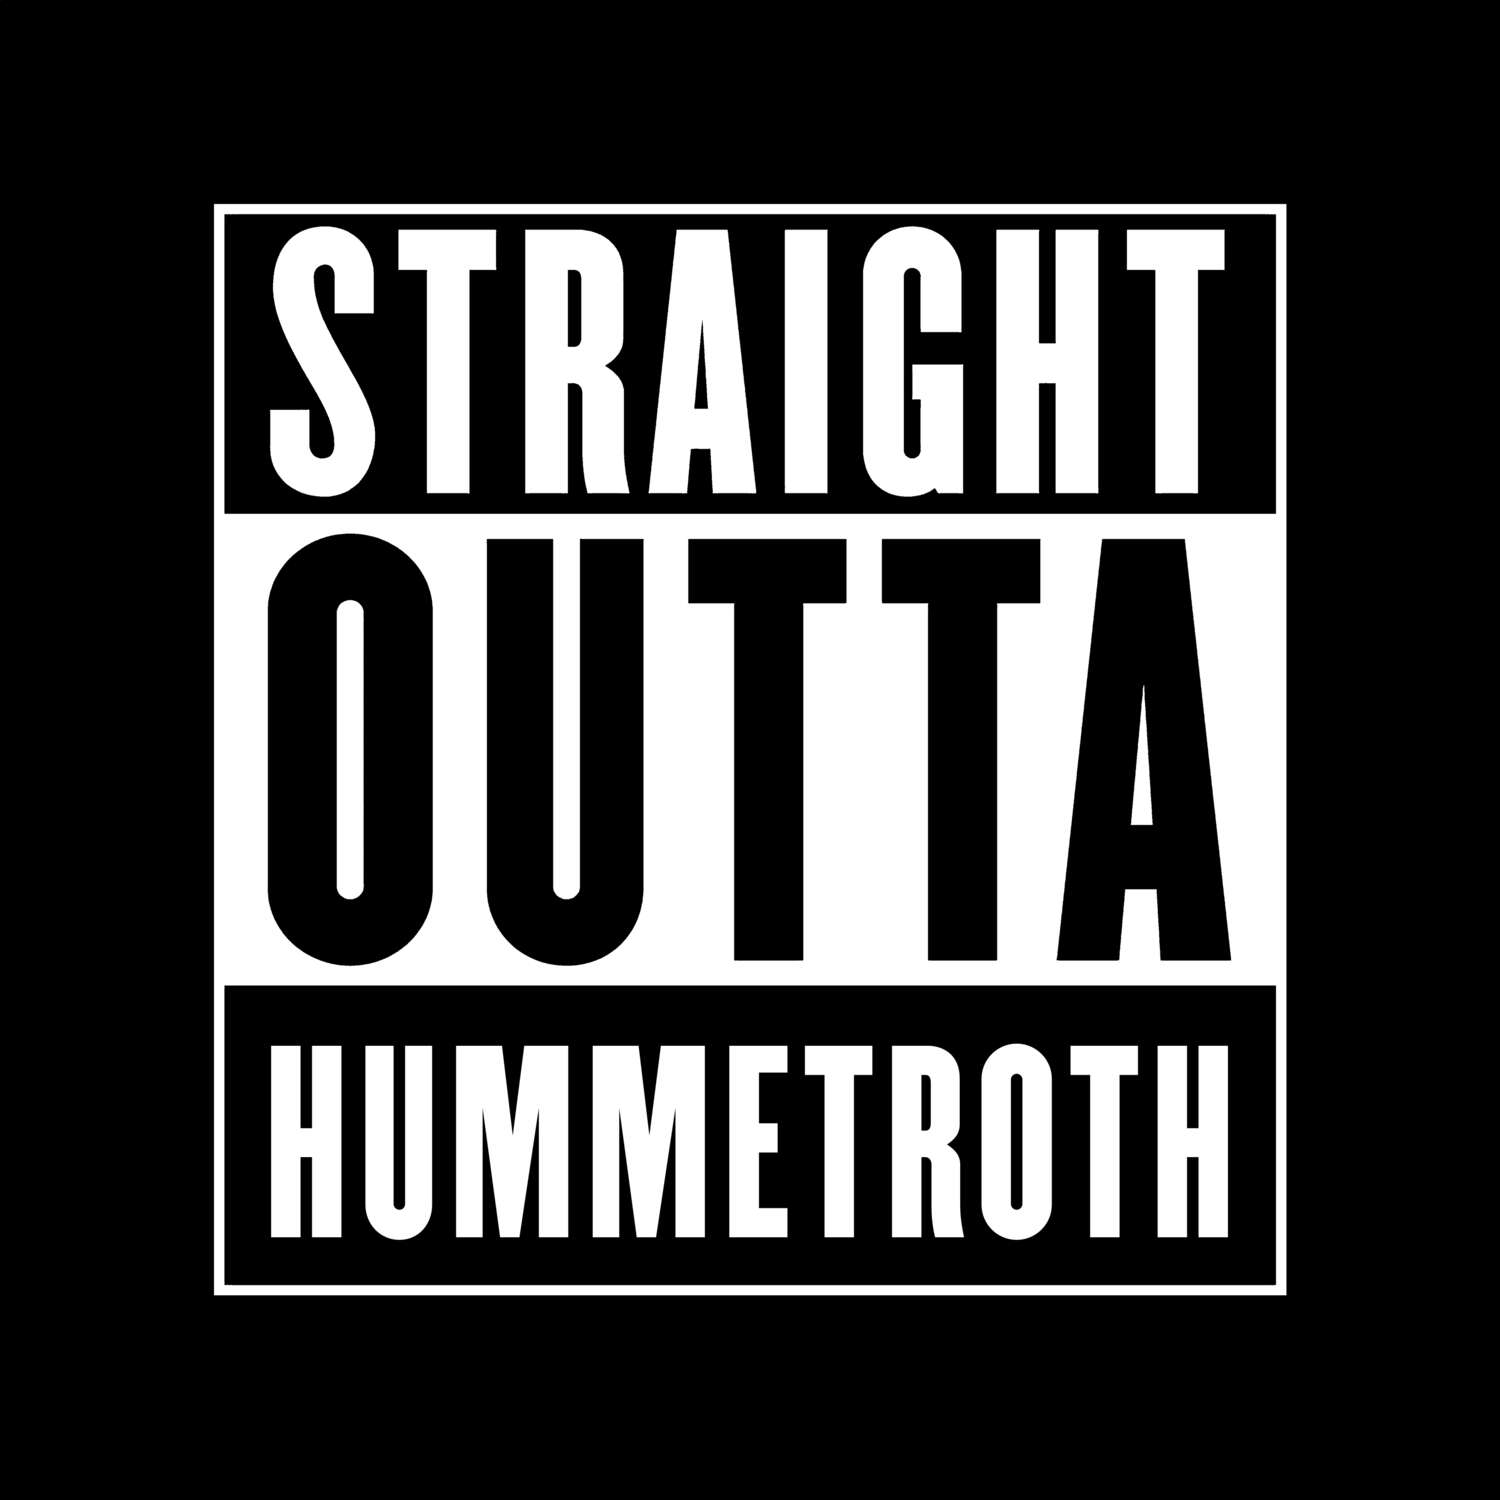 Hummetroth T-Shirt »Straight Outta«